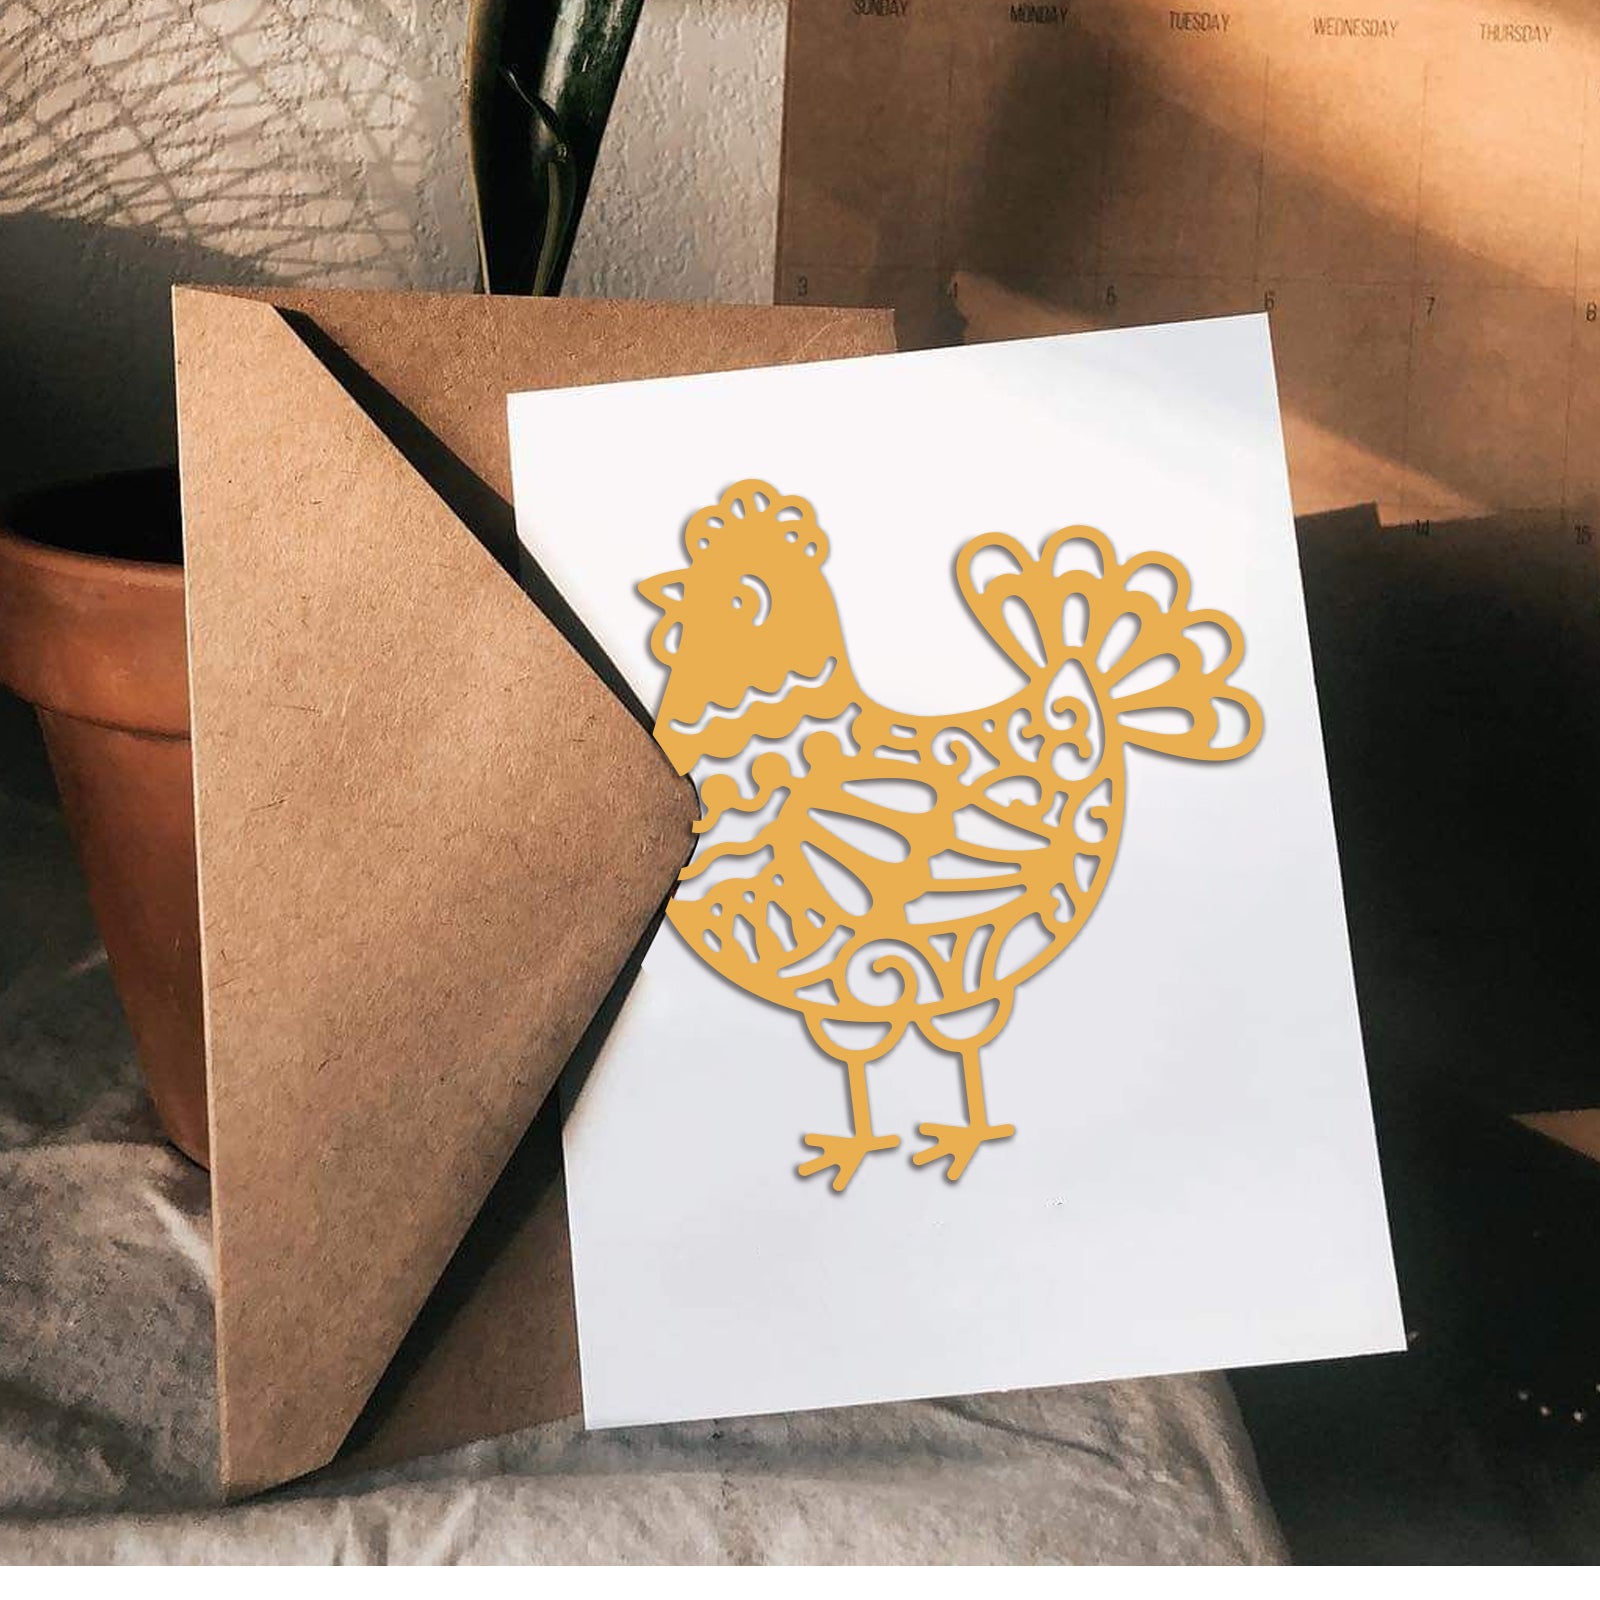 Globleland Chicken, Coop, Egg, Hen, Chick Carbon Steel Cutting Dies Stencils, for DIY Scrapbooking/Photo Album, Decorative Embossing DIY Paper Card